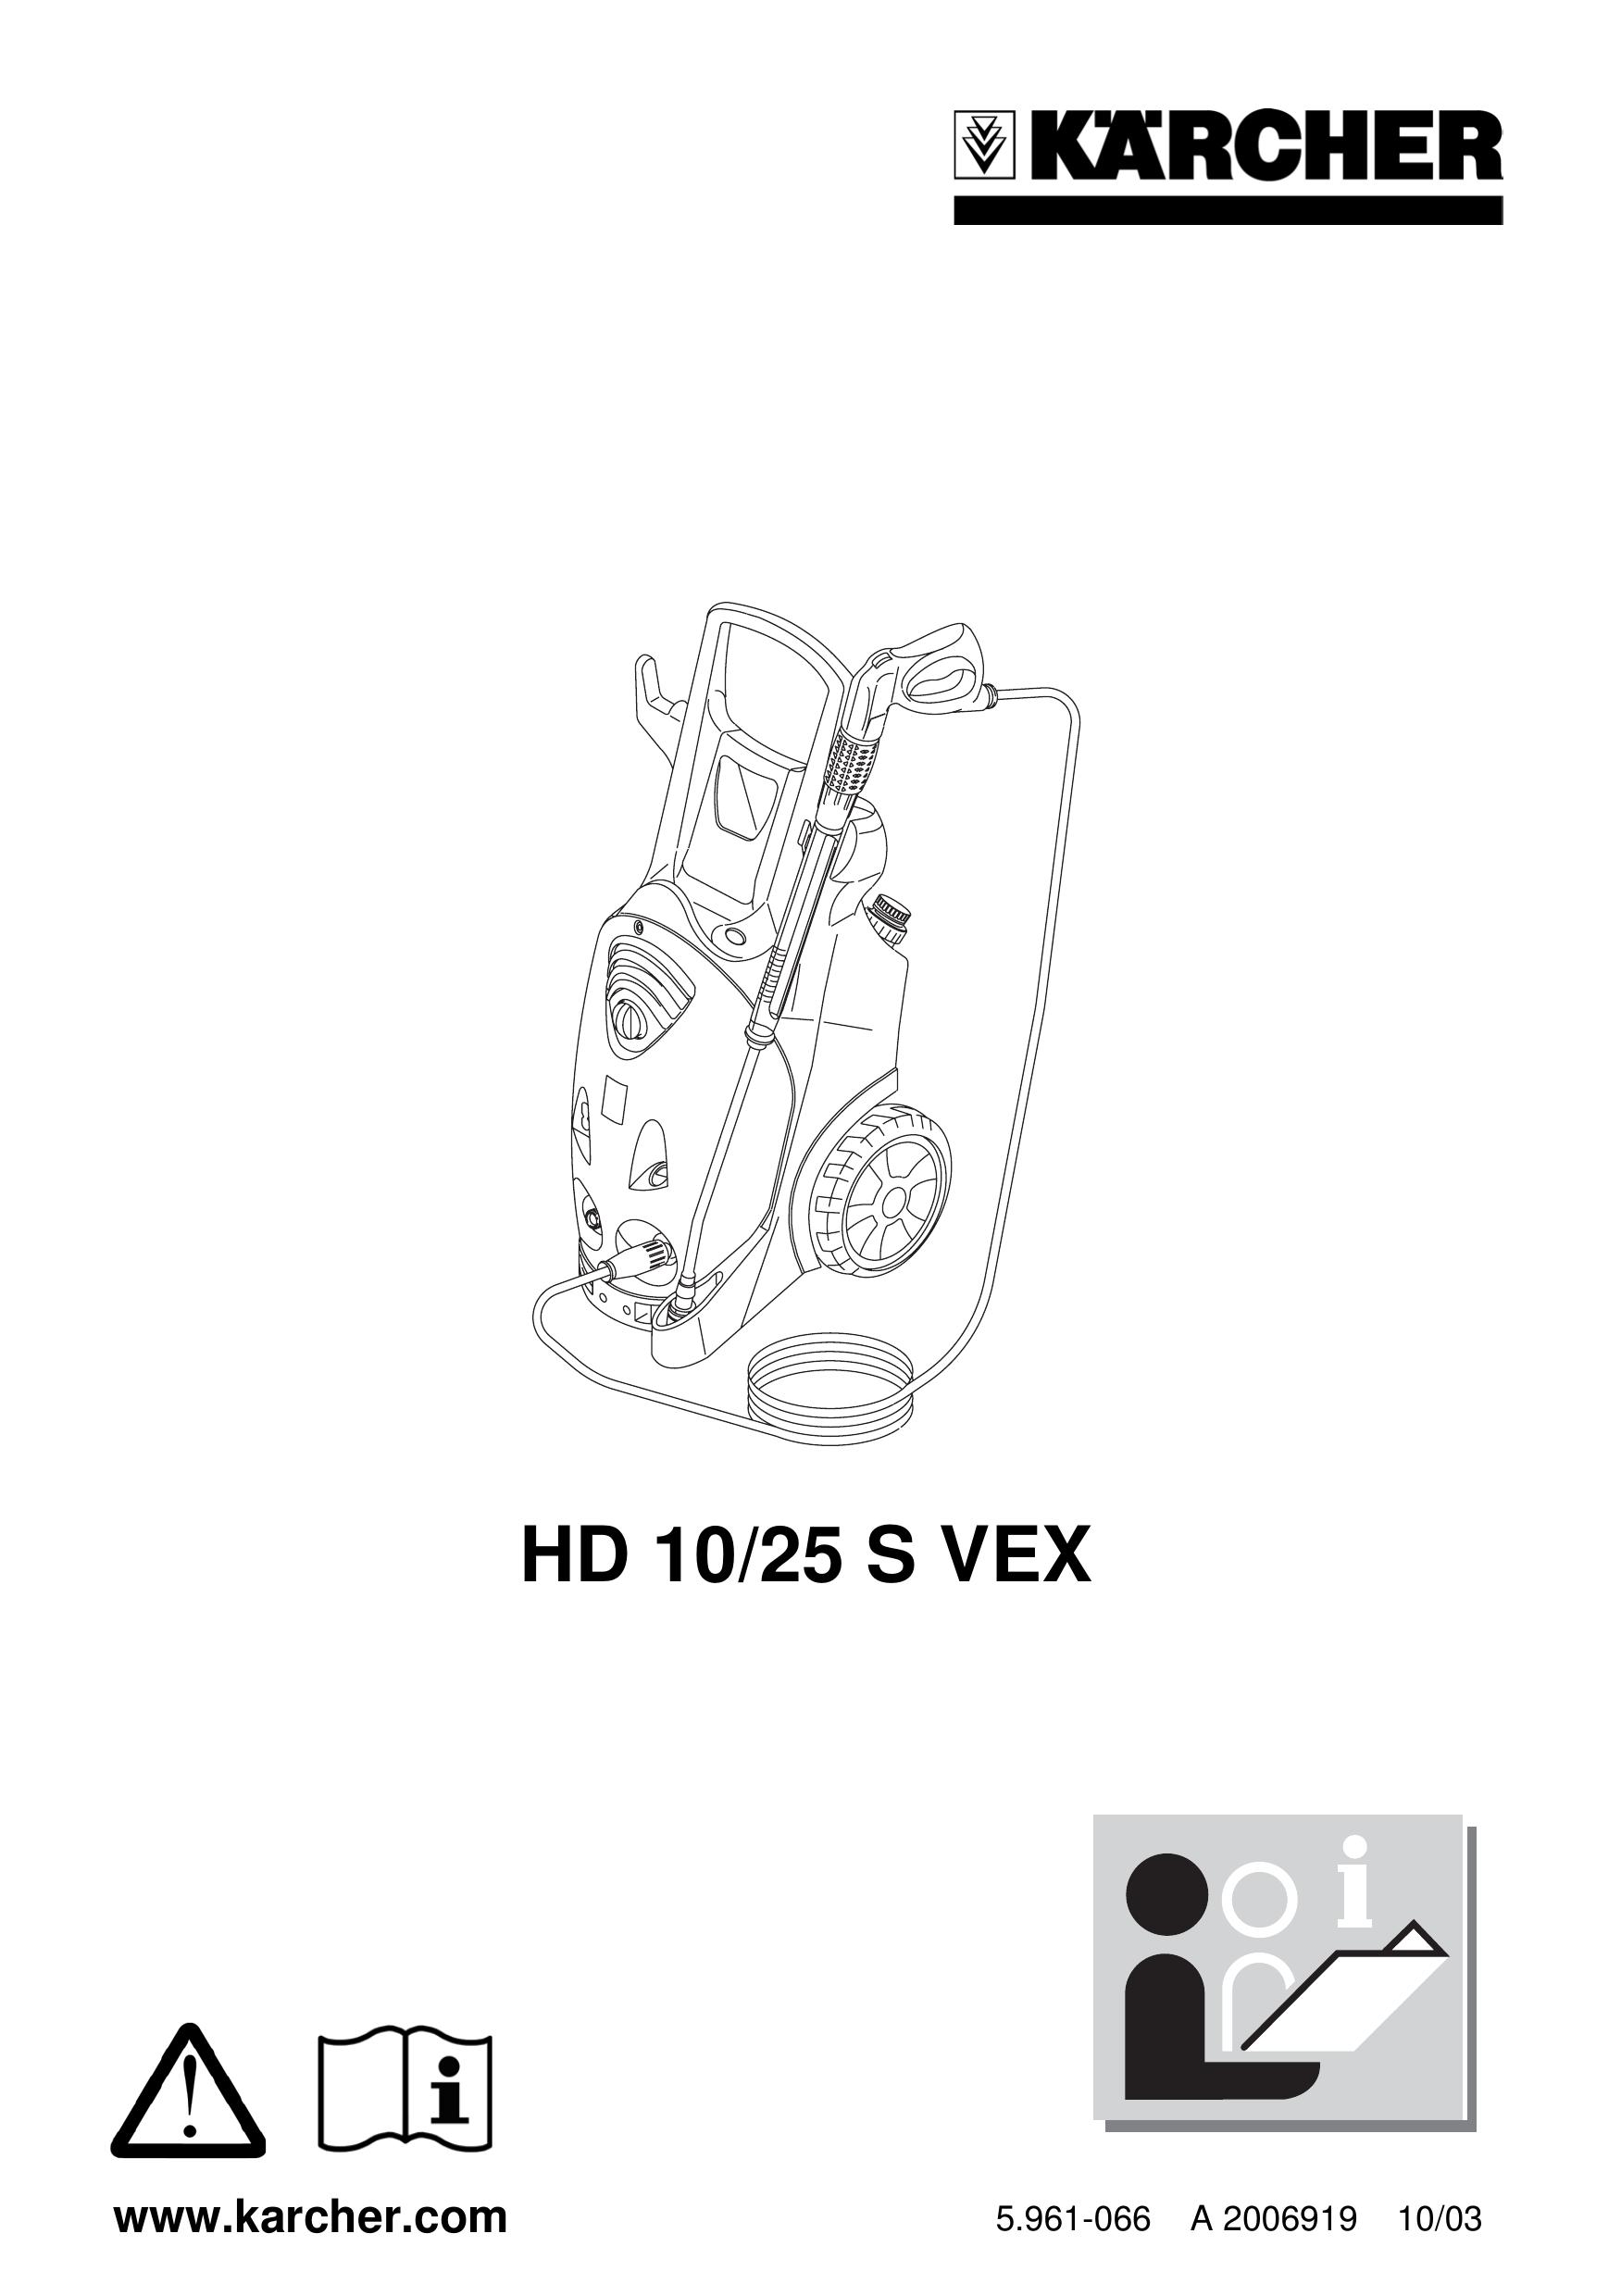 Karcher HD 10/25 S VEX Pressure Washer User Manual